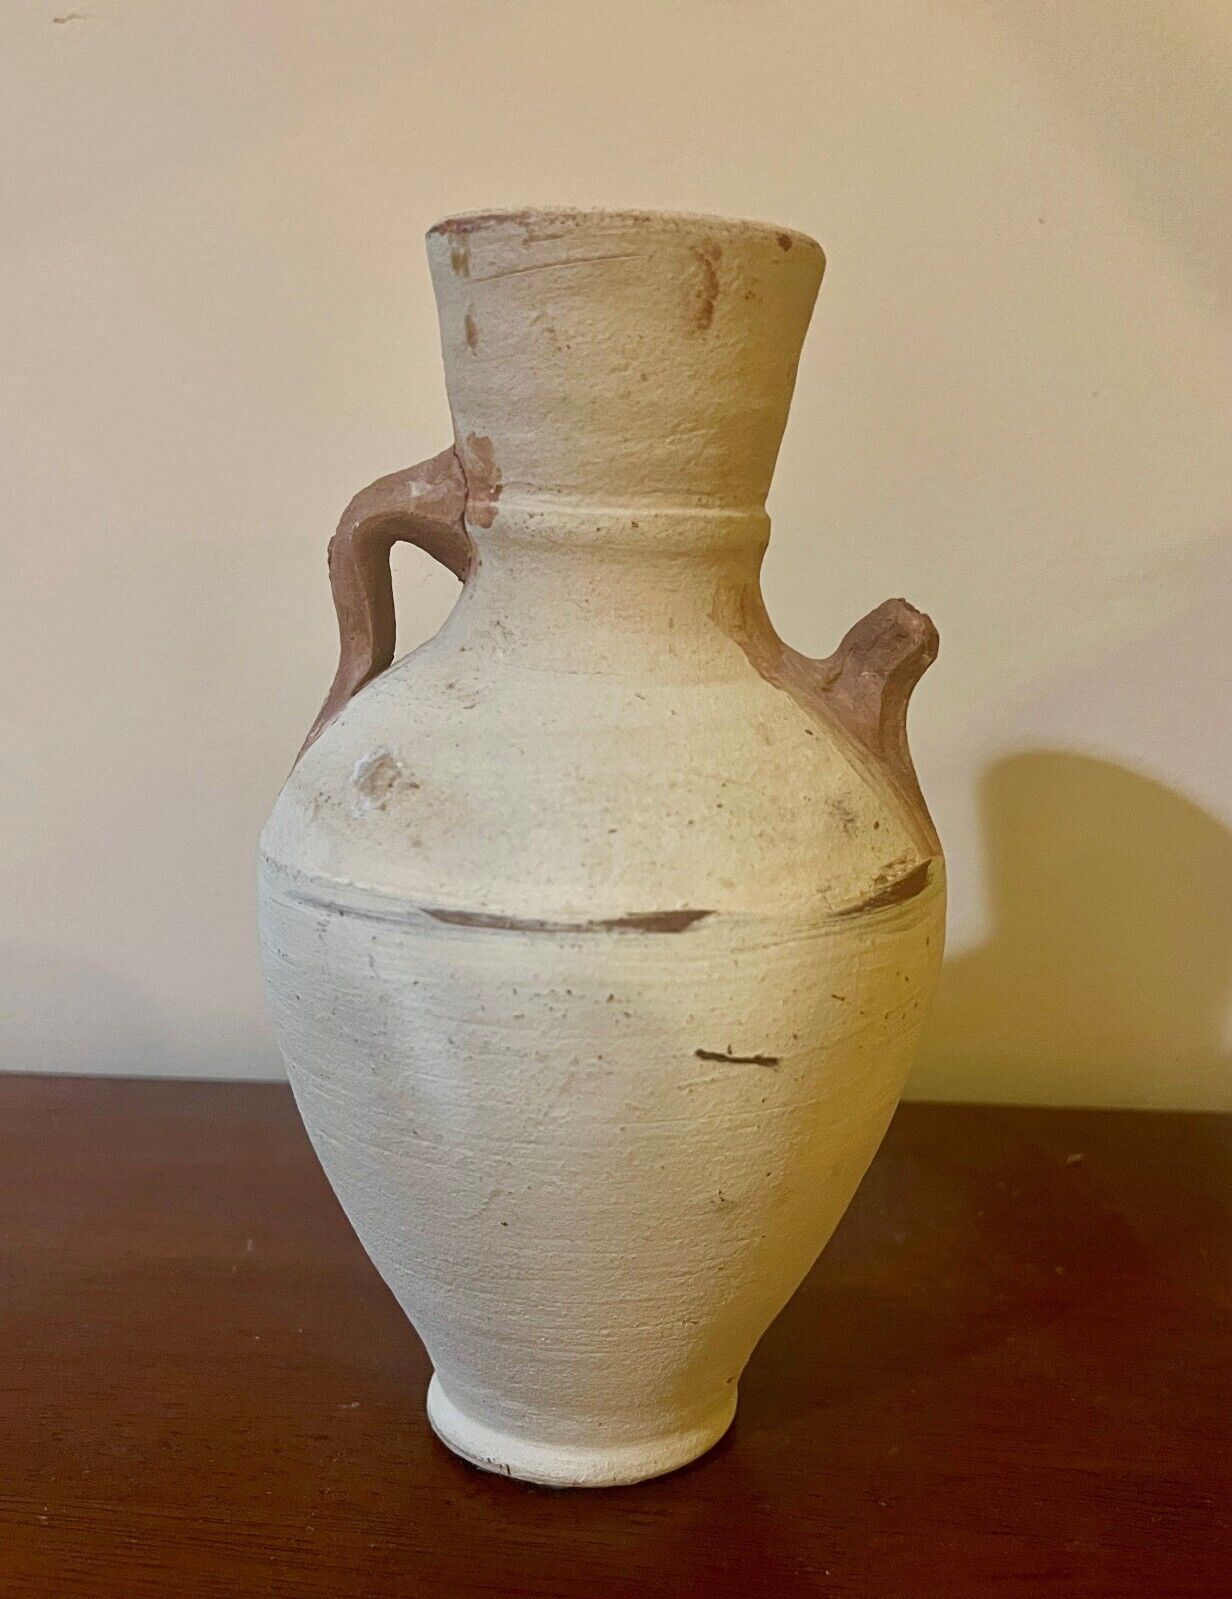 Primitive rustic raw handmade clay terra cotta earthenware jug vessel pitcher